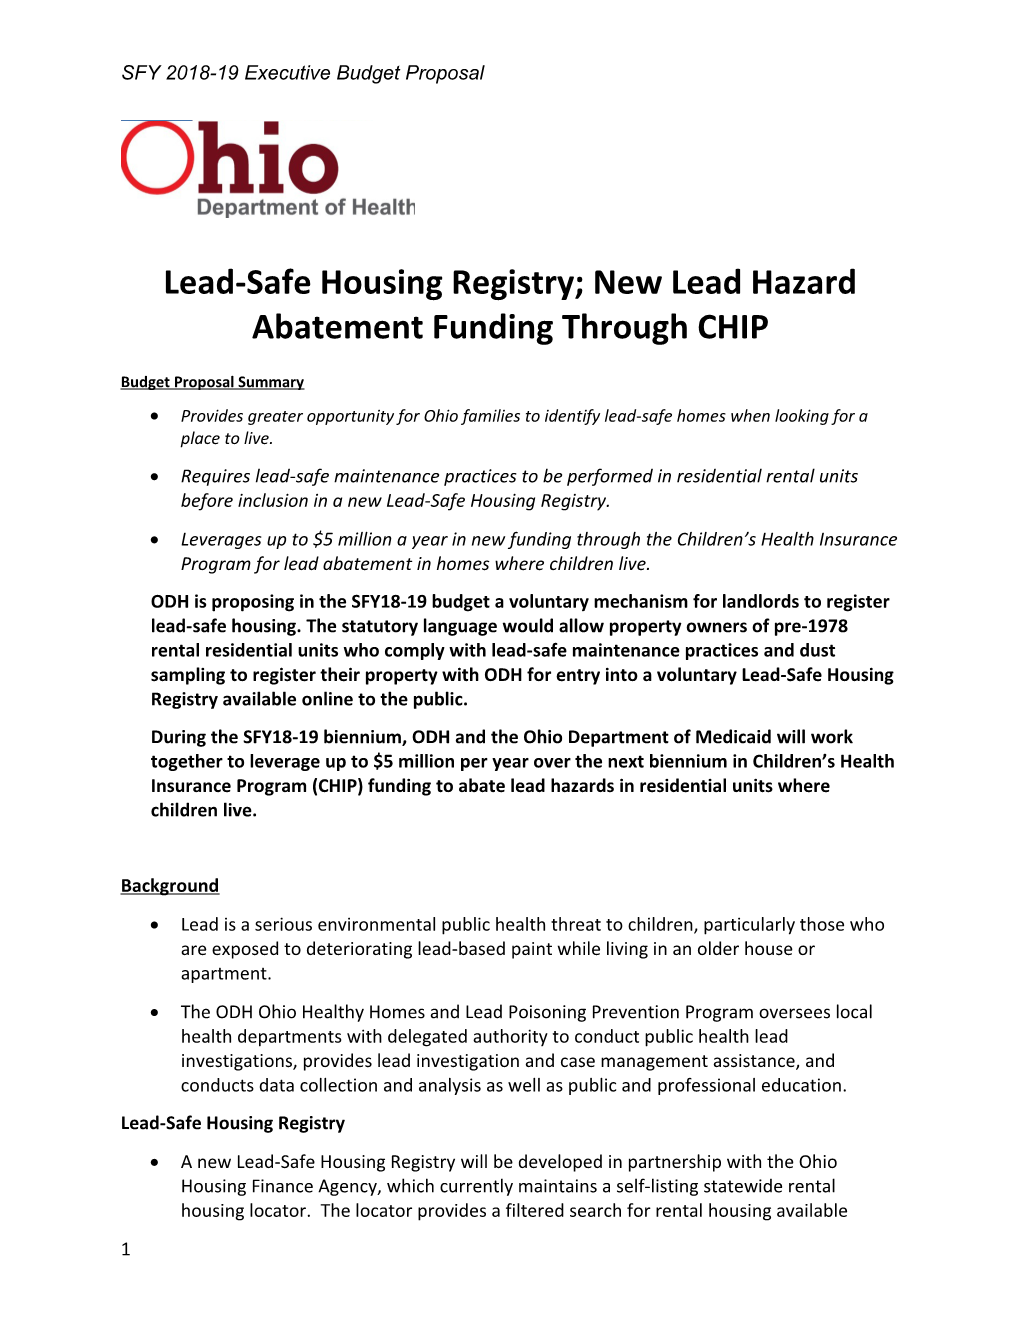 Lead-Safe Housing Registry; New Lead Hazard Abatement Funding Through CHIP